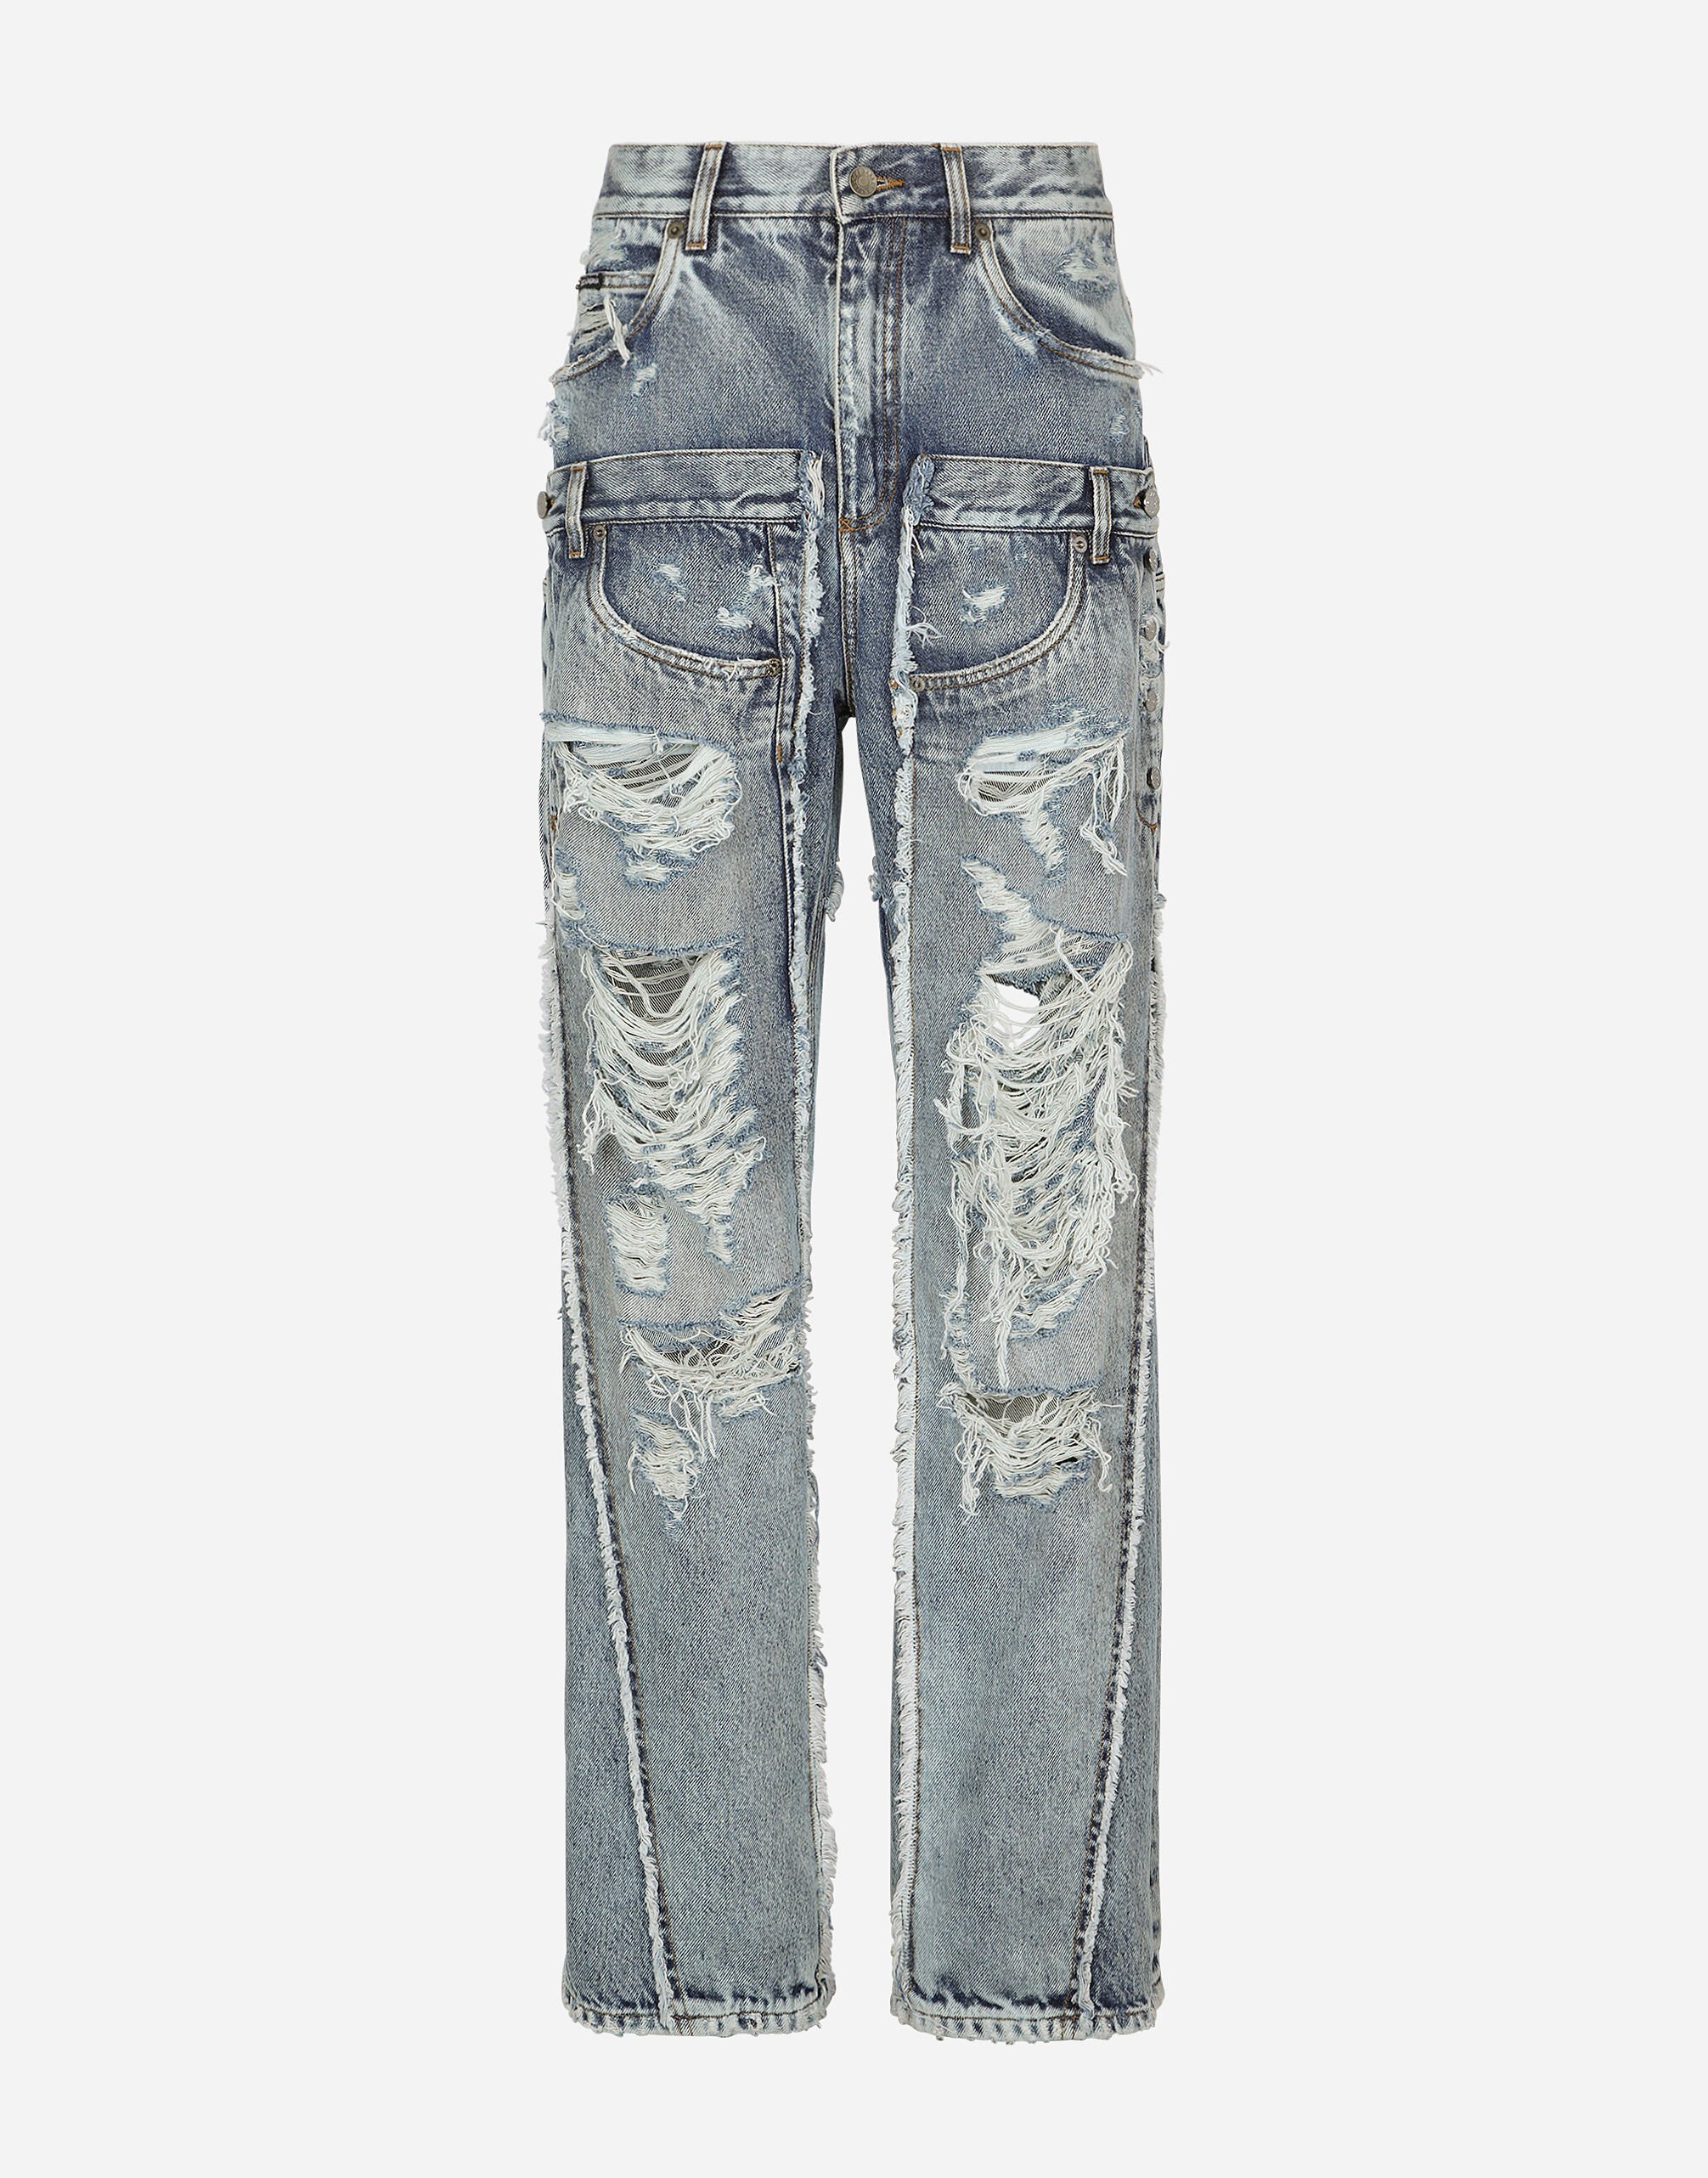 Dolce & Gabbana KIM DOLCE&GABBANA Jeans in denim patchwork con rotture Gold WNP4L2W1111